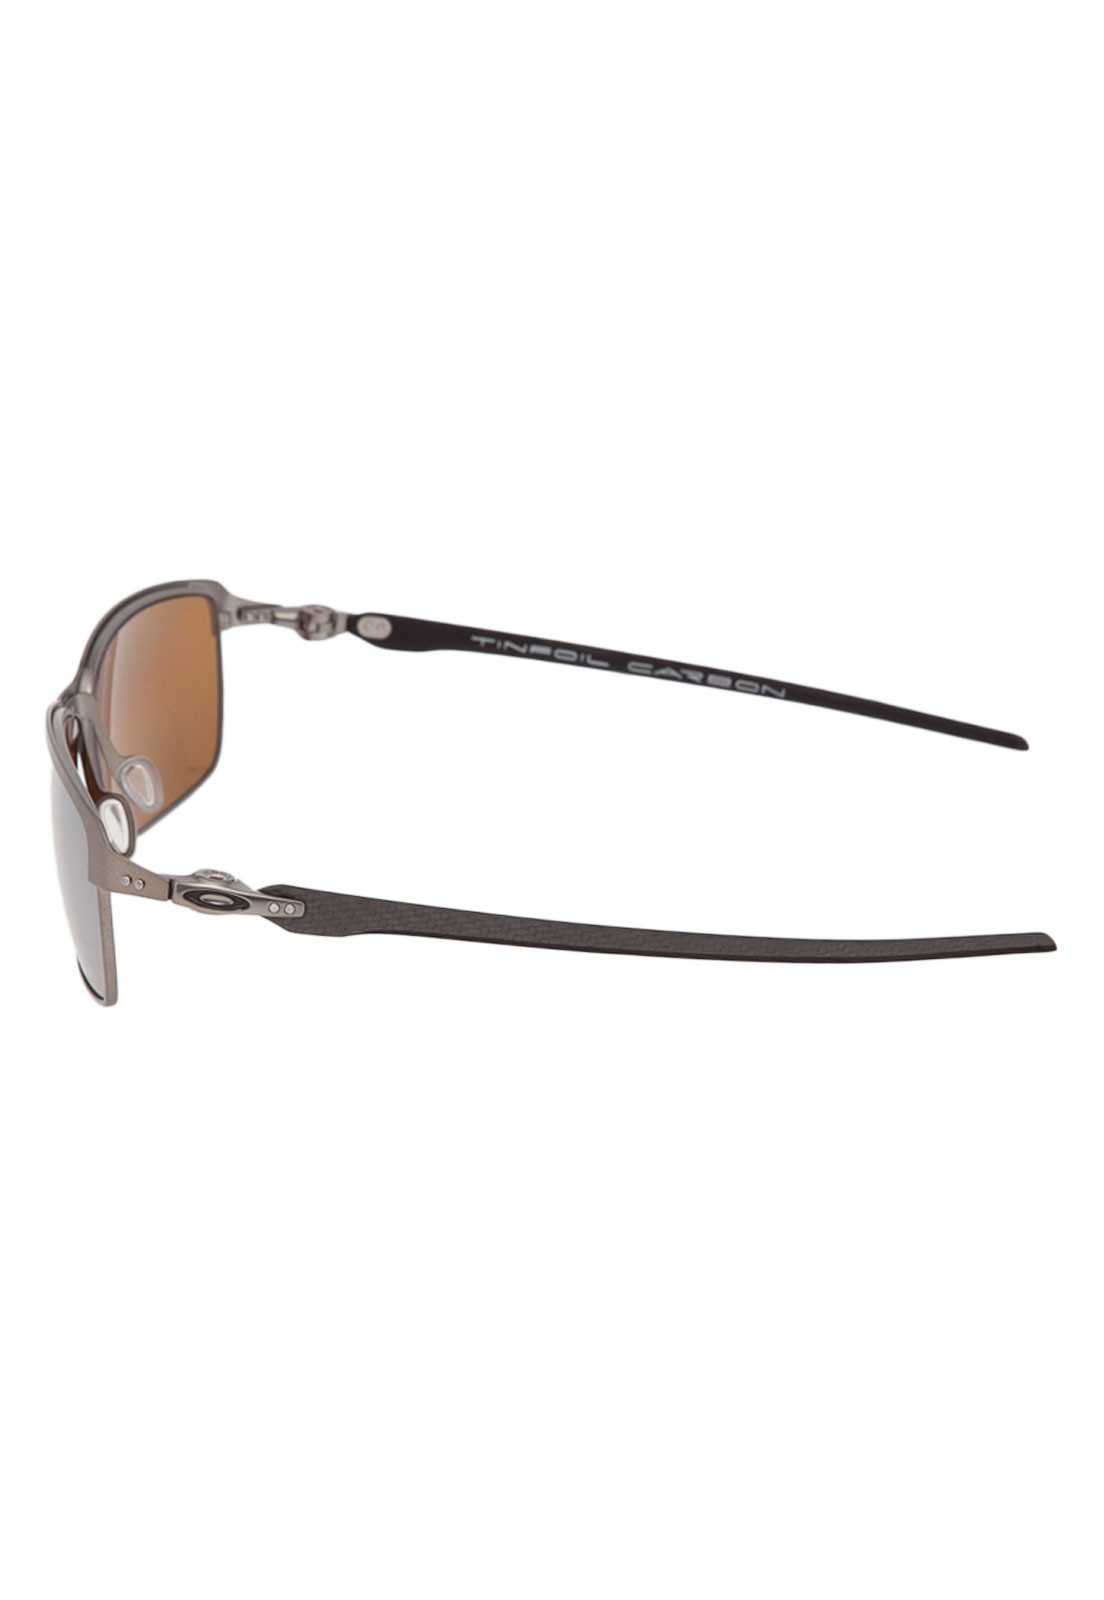 Óculos Oakley Tinfoil Carbon Titanium Black Iridium Polarizado LanÇamento Ref Oo6018 05